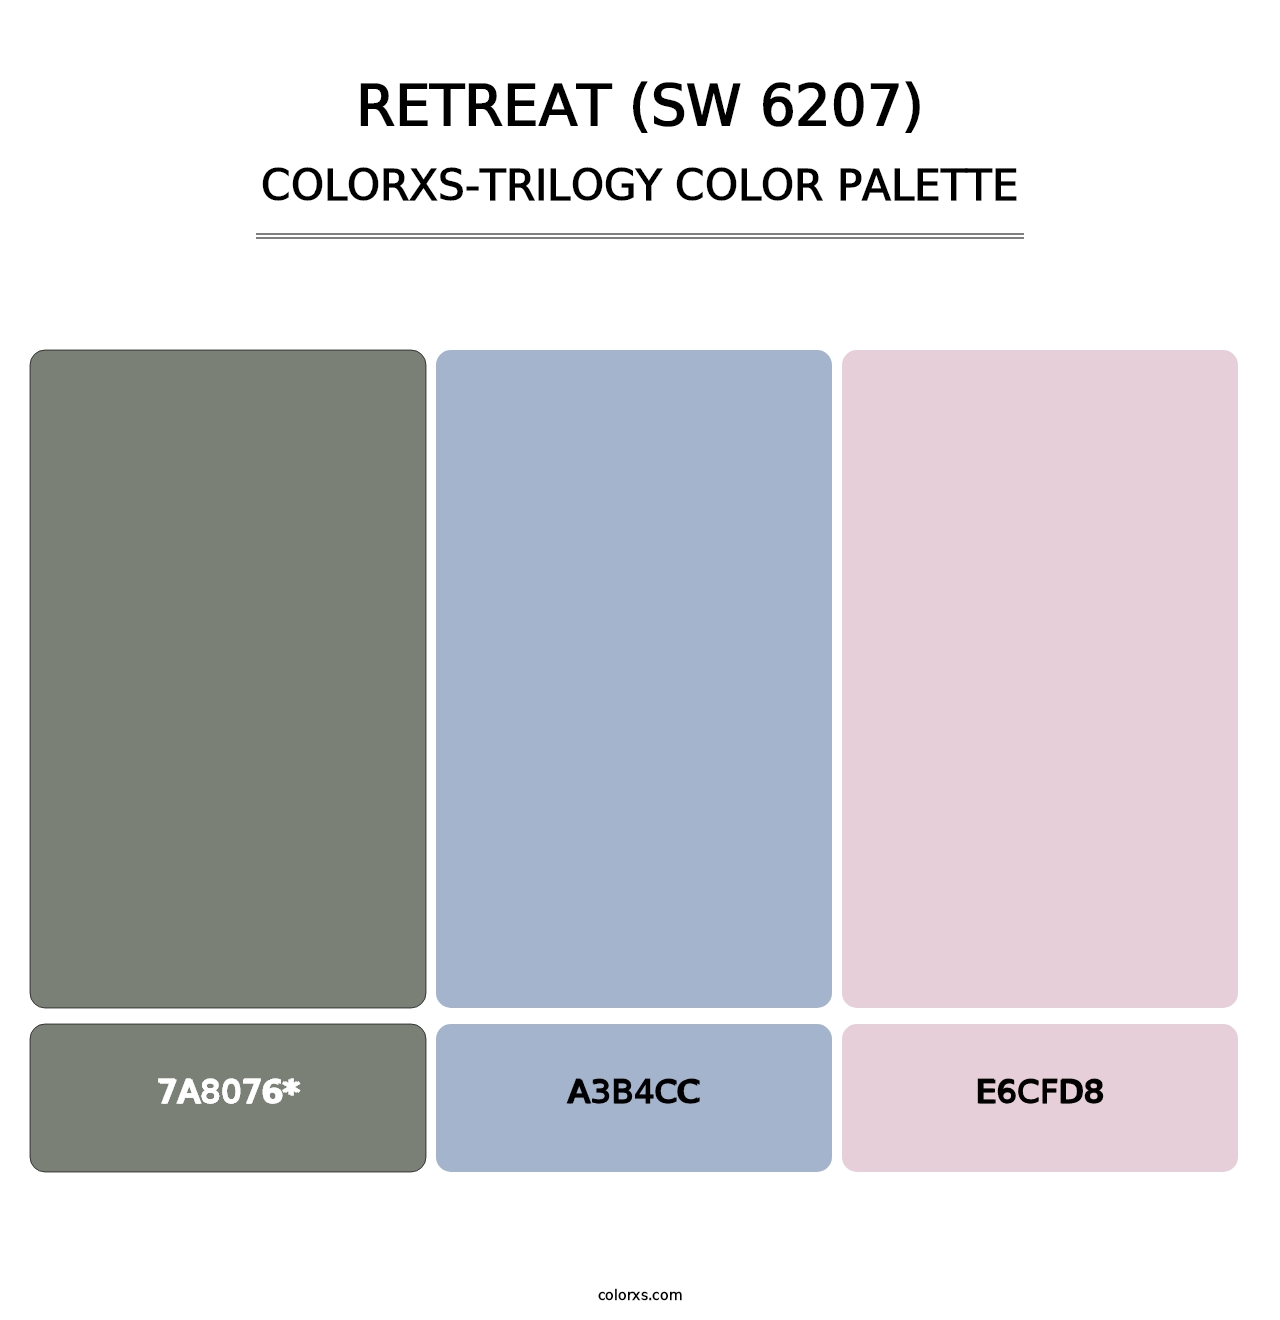 Retreat (SW 6207) - Colorxs Trilogy Palette